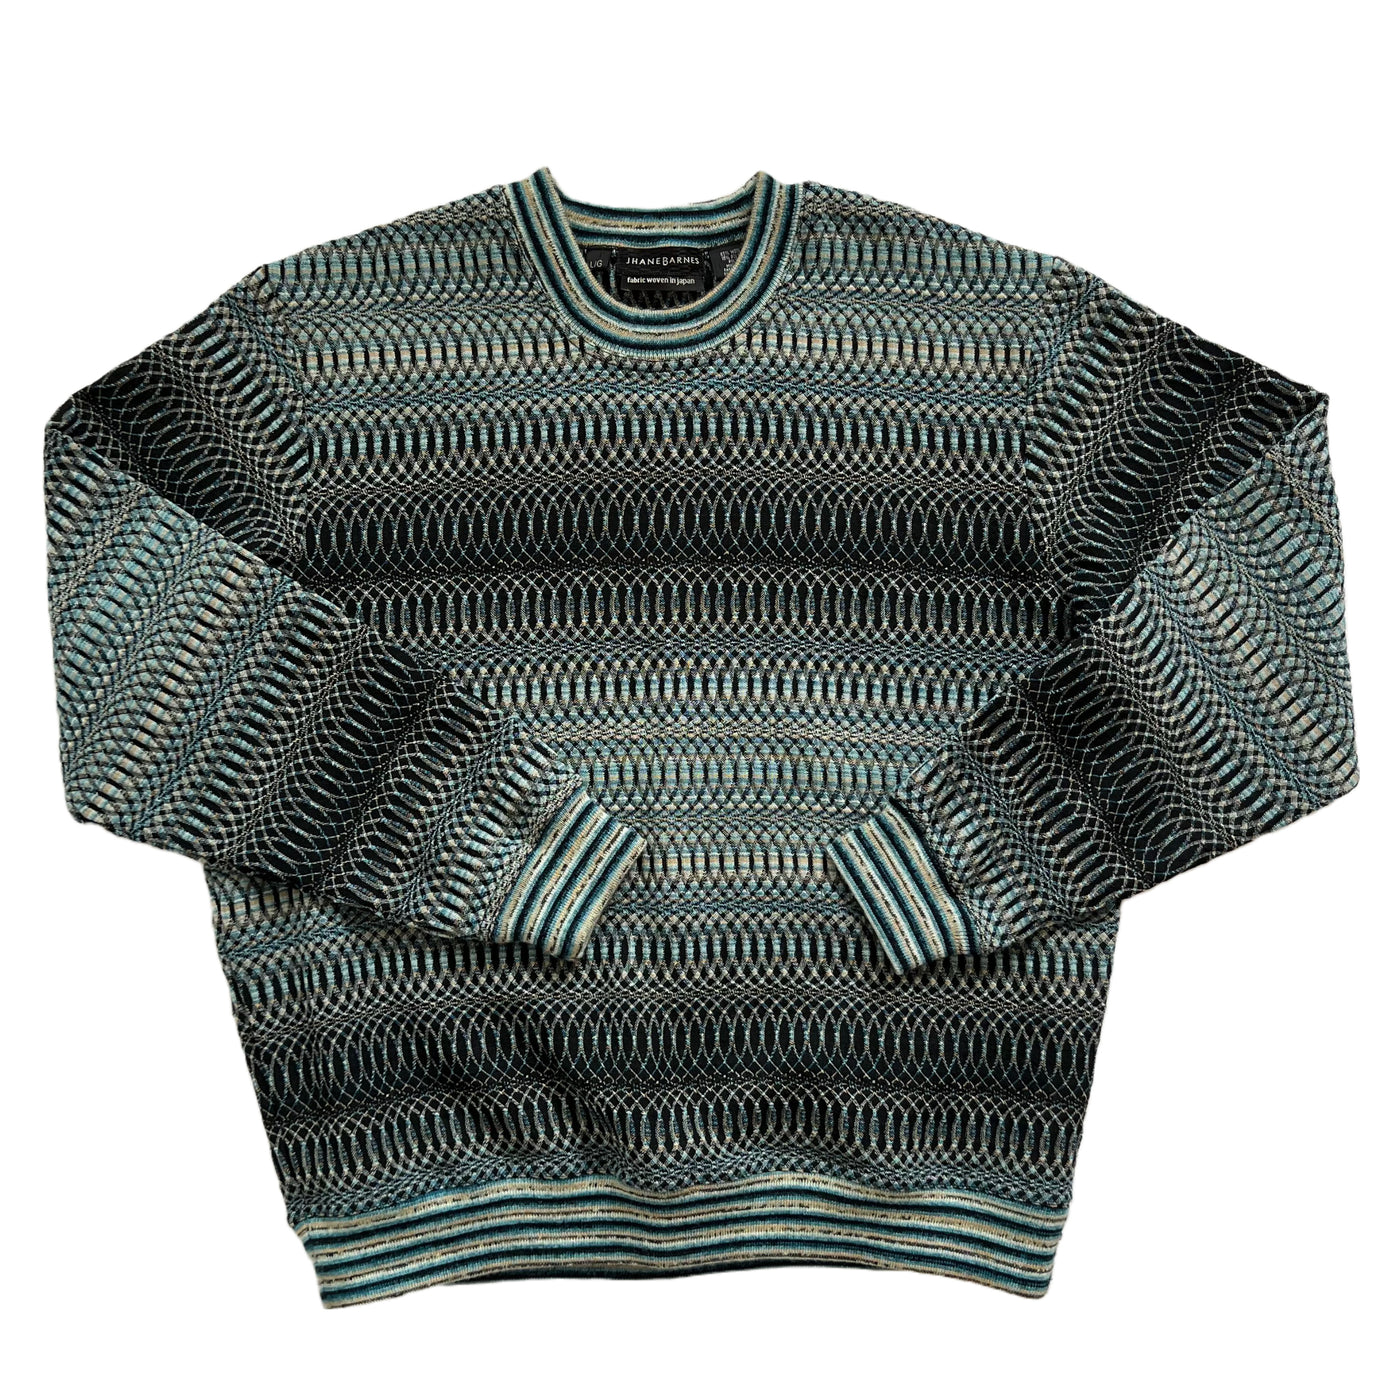 Vintage 90's Jhane Barnes Sweater